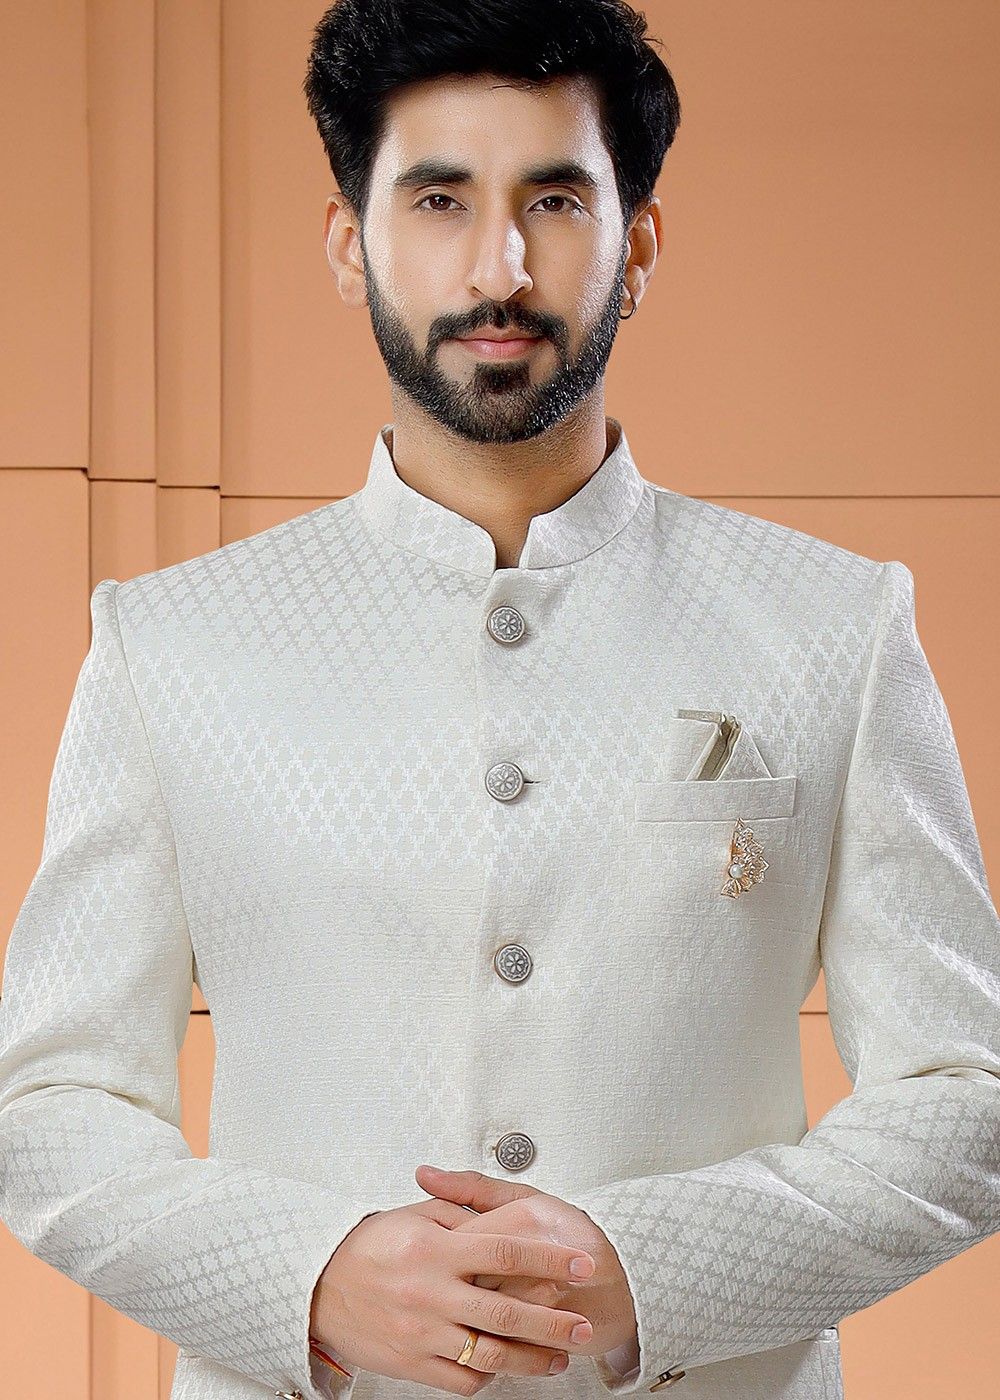 Men New Wedding Occasion Jodhpuri Suit Formal Attractive Jacket Trouser One  Size | eBay